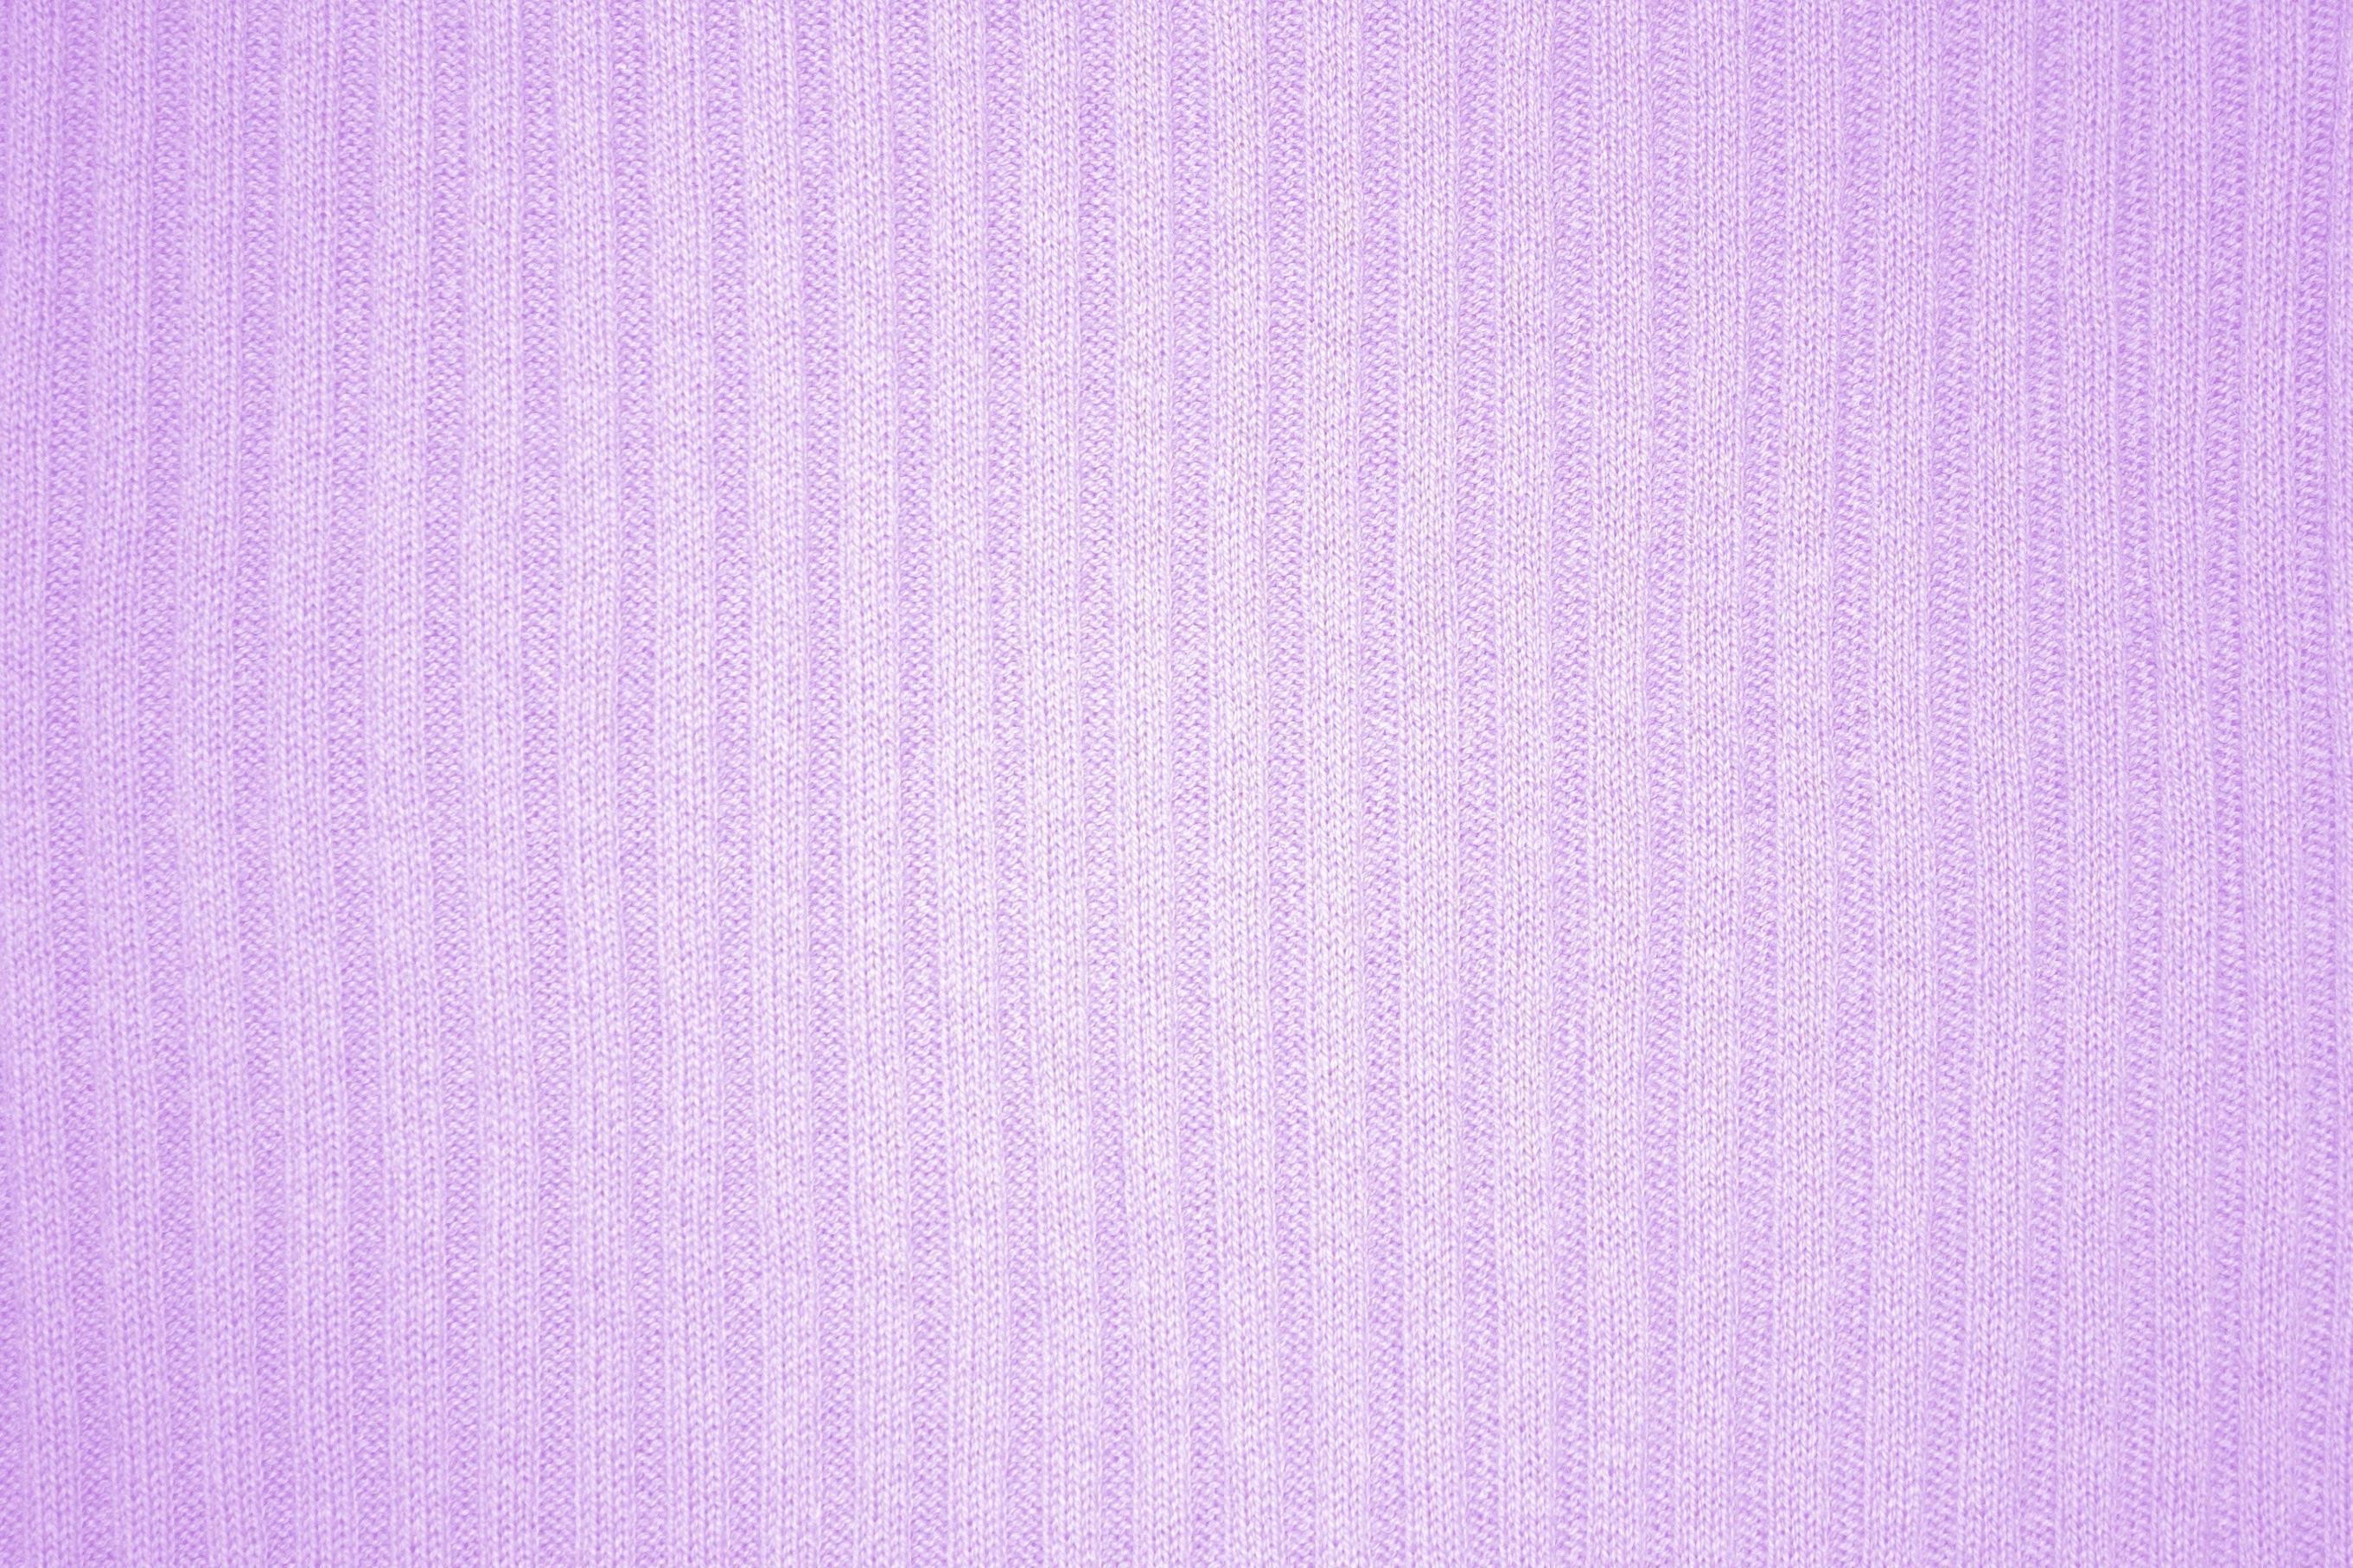 2722x1814 Simple Light Purple Backgrounds Hd Widescreen 10 HD Wallpapers .